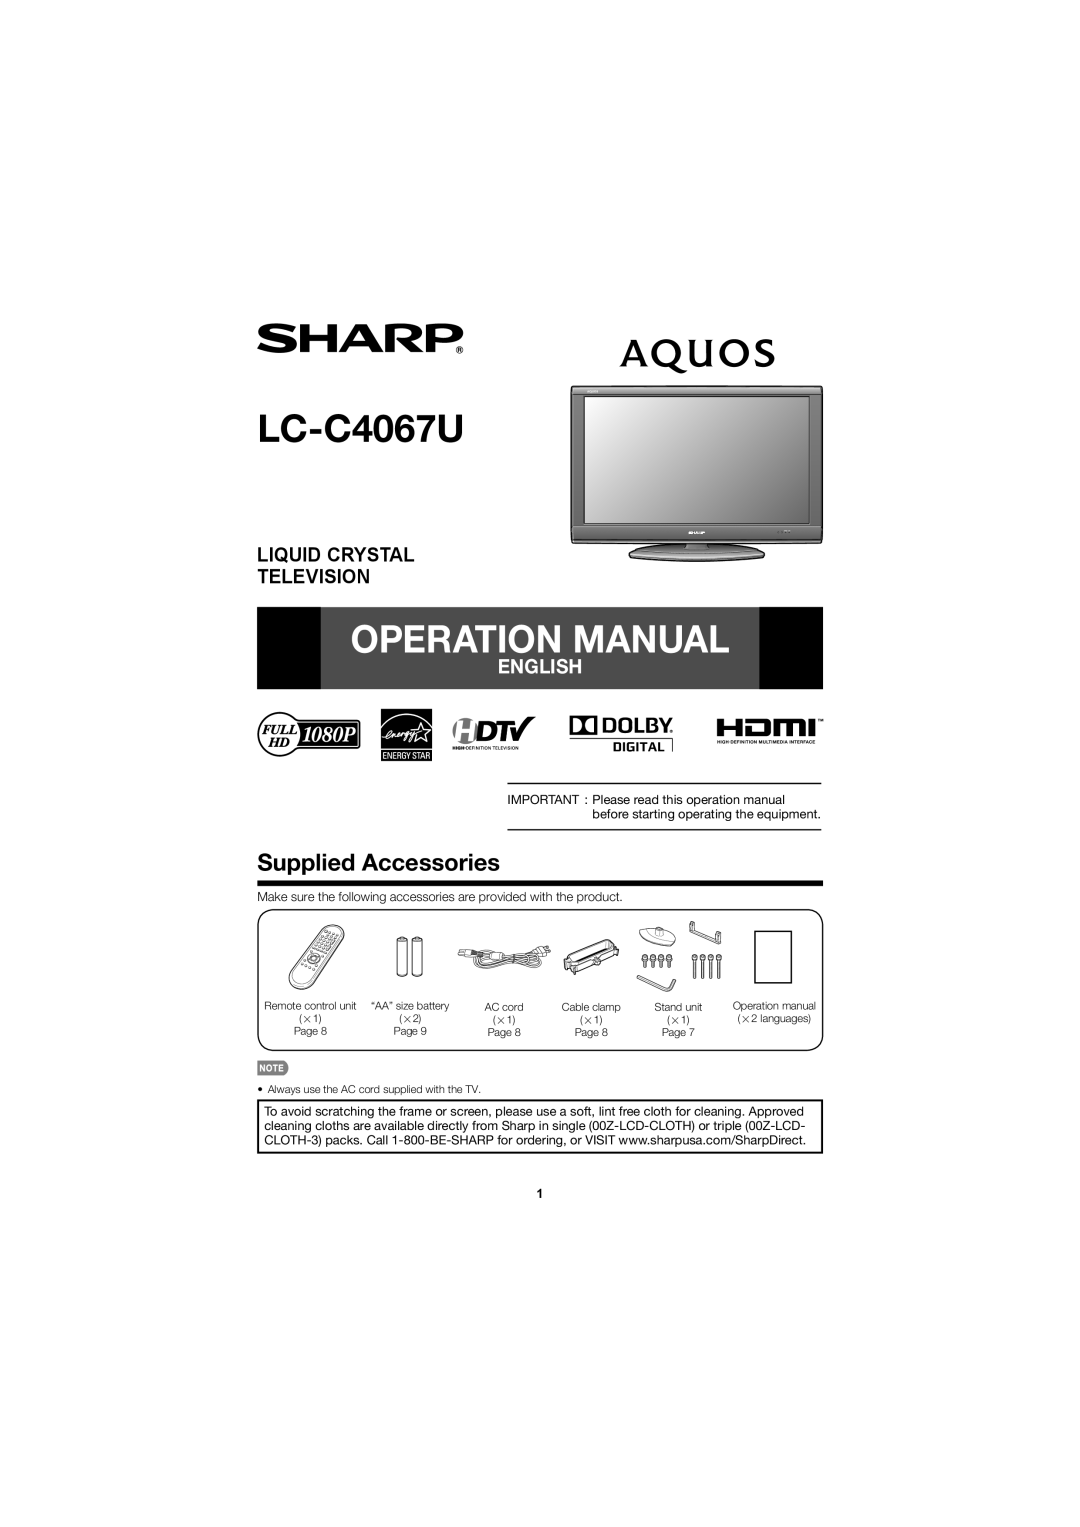 Sharp LC C4067U operation manual LC-C4067U, Supplied Accessories, Operation Manual, Liquid Crystal Television, English 